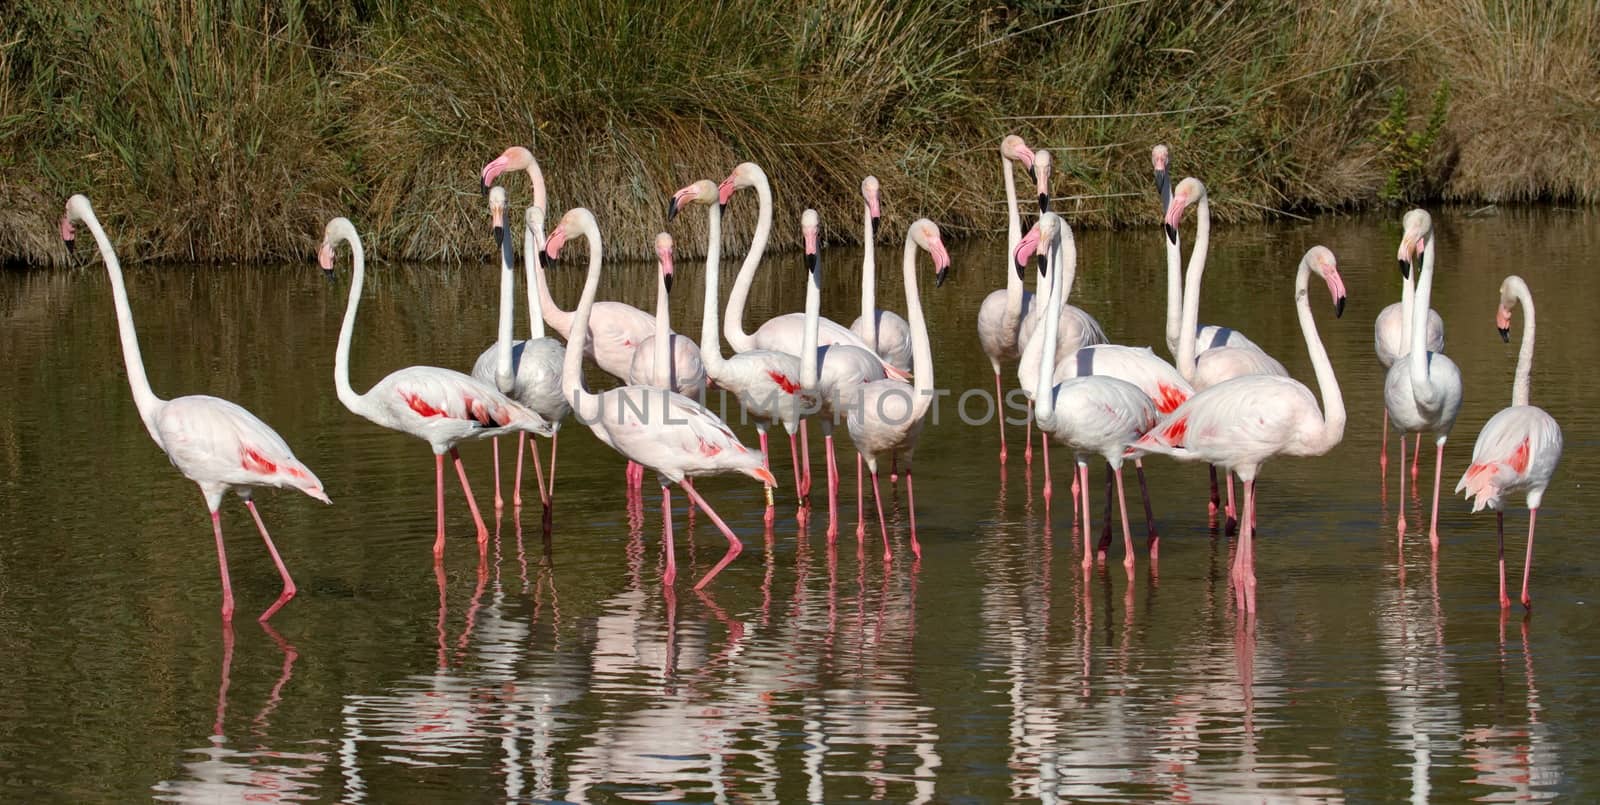 Greater flamingos, phoenicopterus roseus, Camargue, France by Elenaphotos21